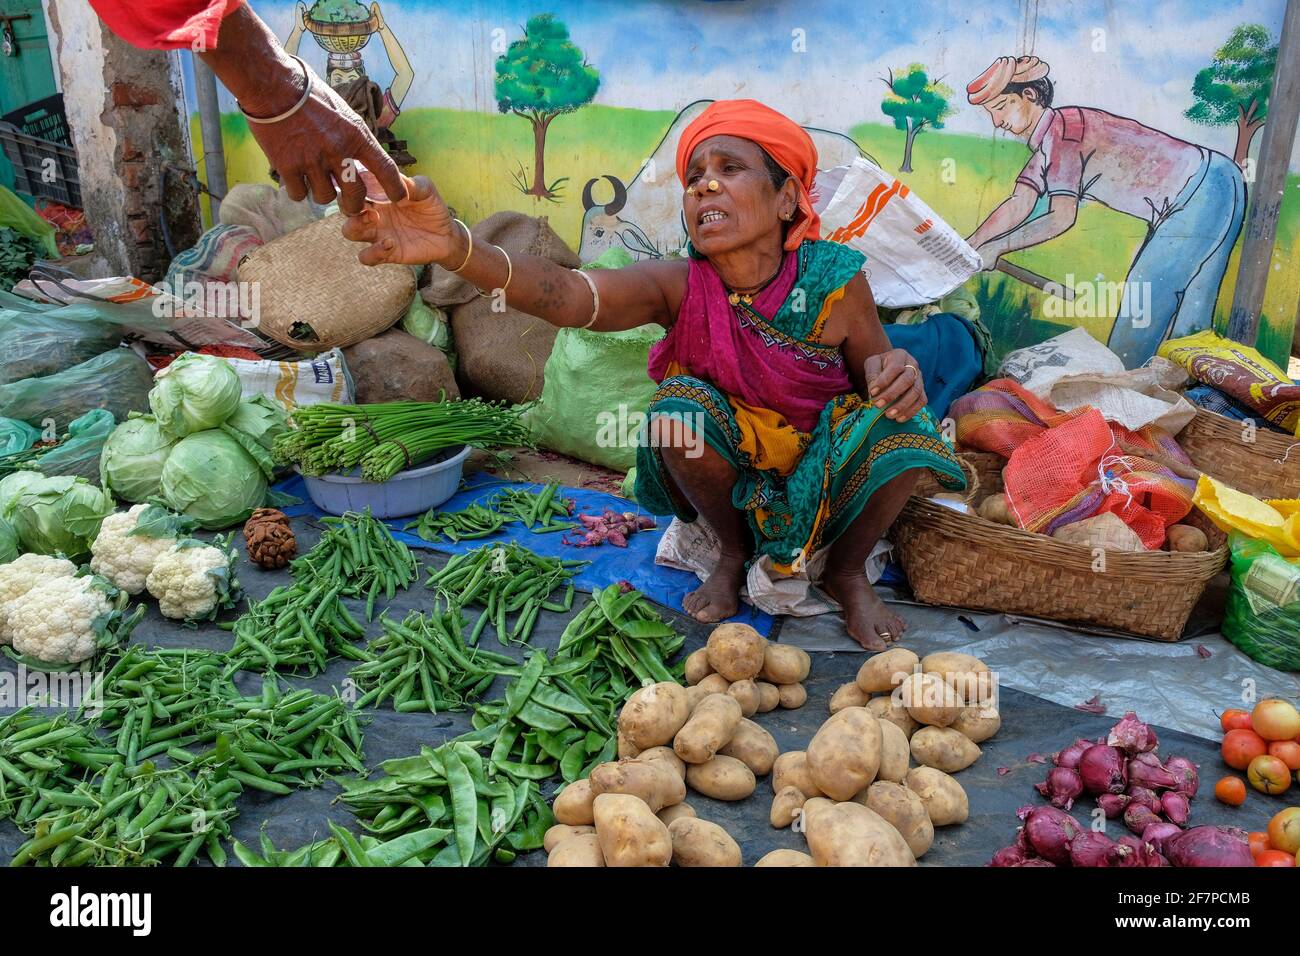 Koraput, India - February 2021: Adivasi woman from the Kondh tribe selling vegetables in the Koraput market on February 21, 2021 in Odisha, India. Stock Photo